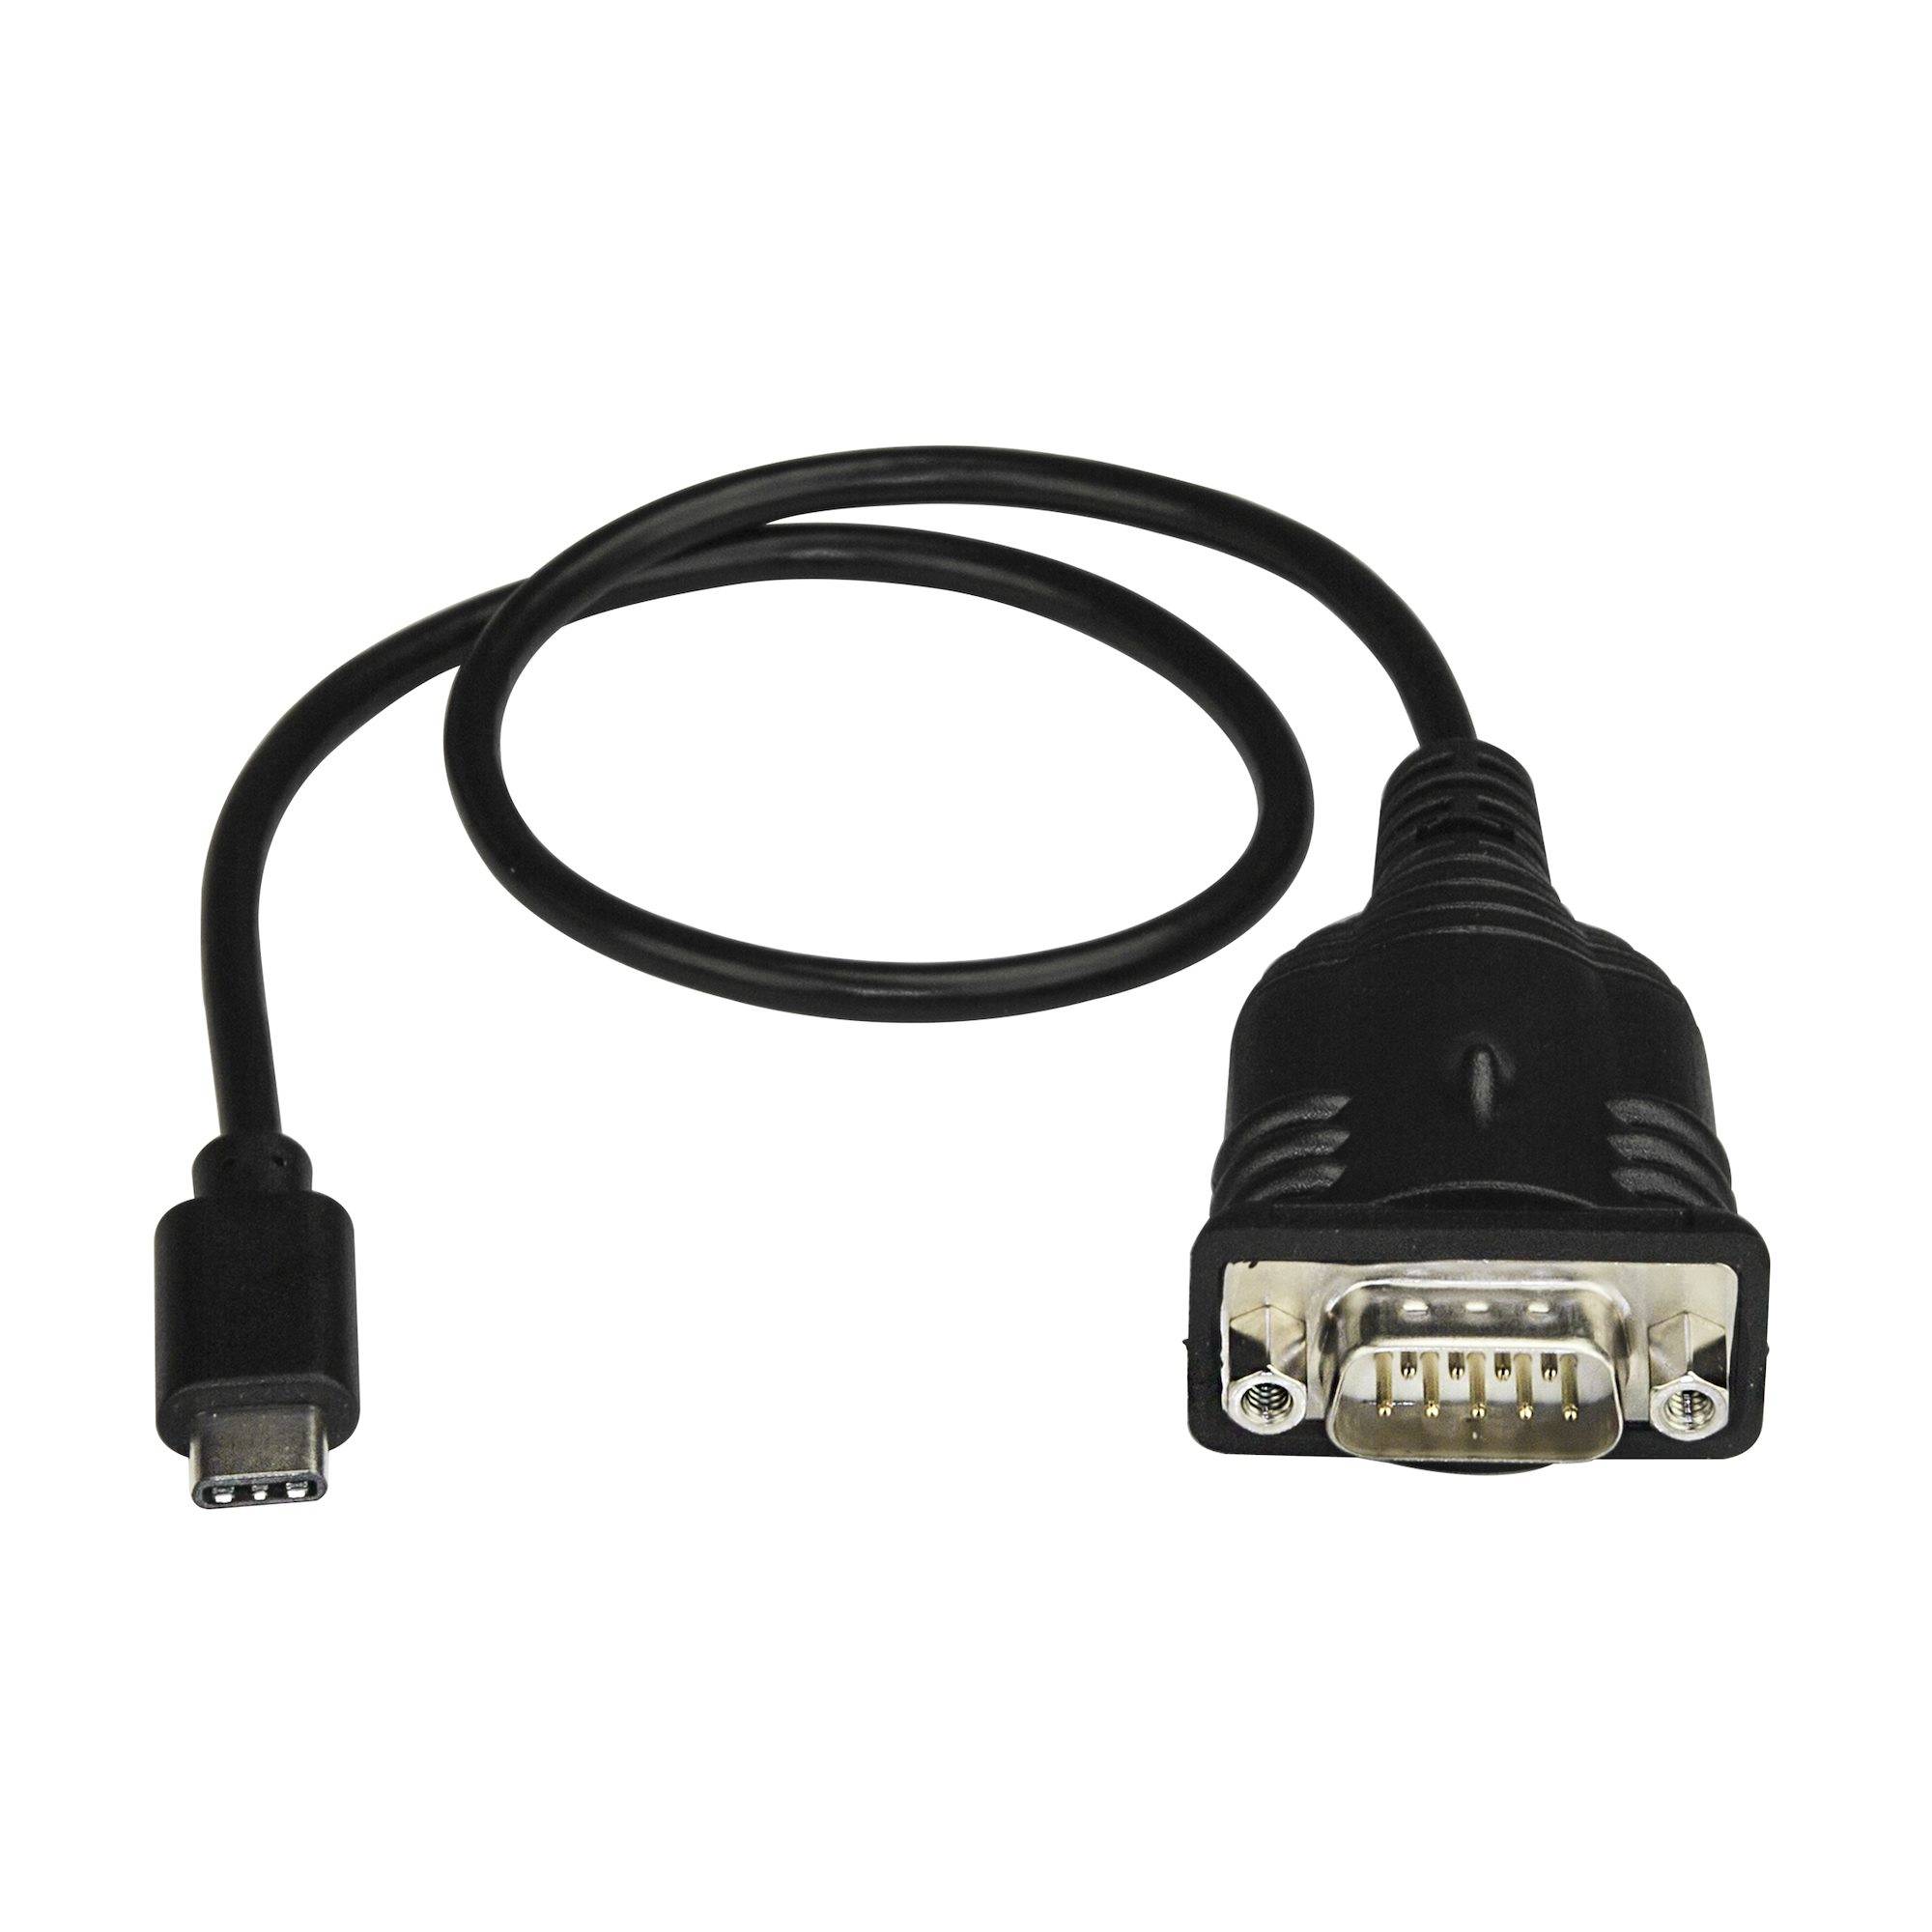 Rca Informatique - image du produit : USB C TO SERIAL ADAPTER WITH COM RETENTION